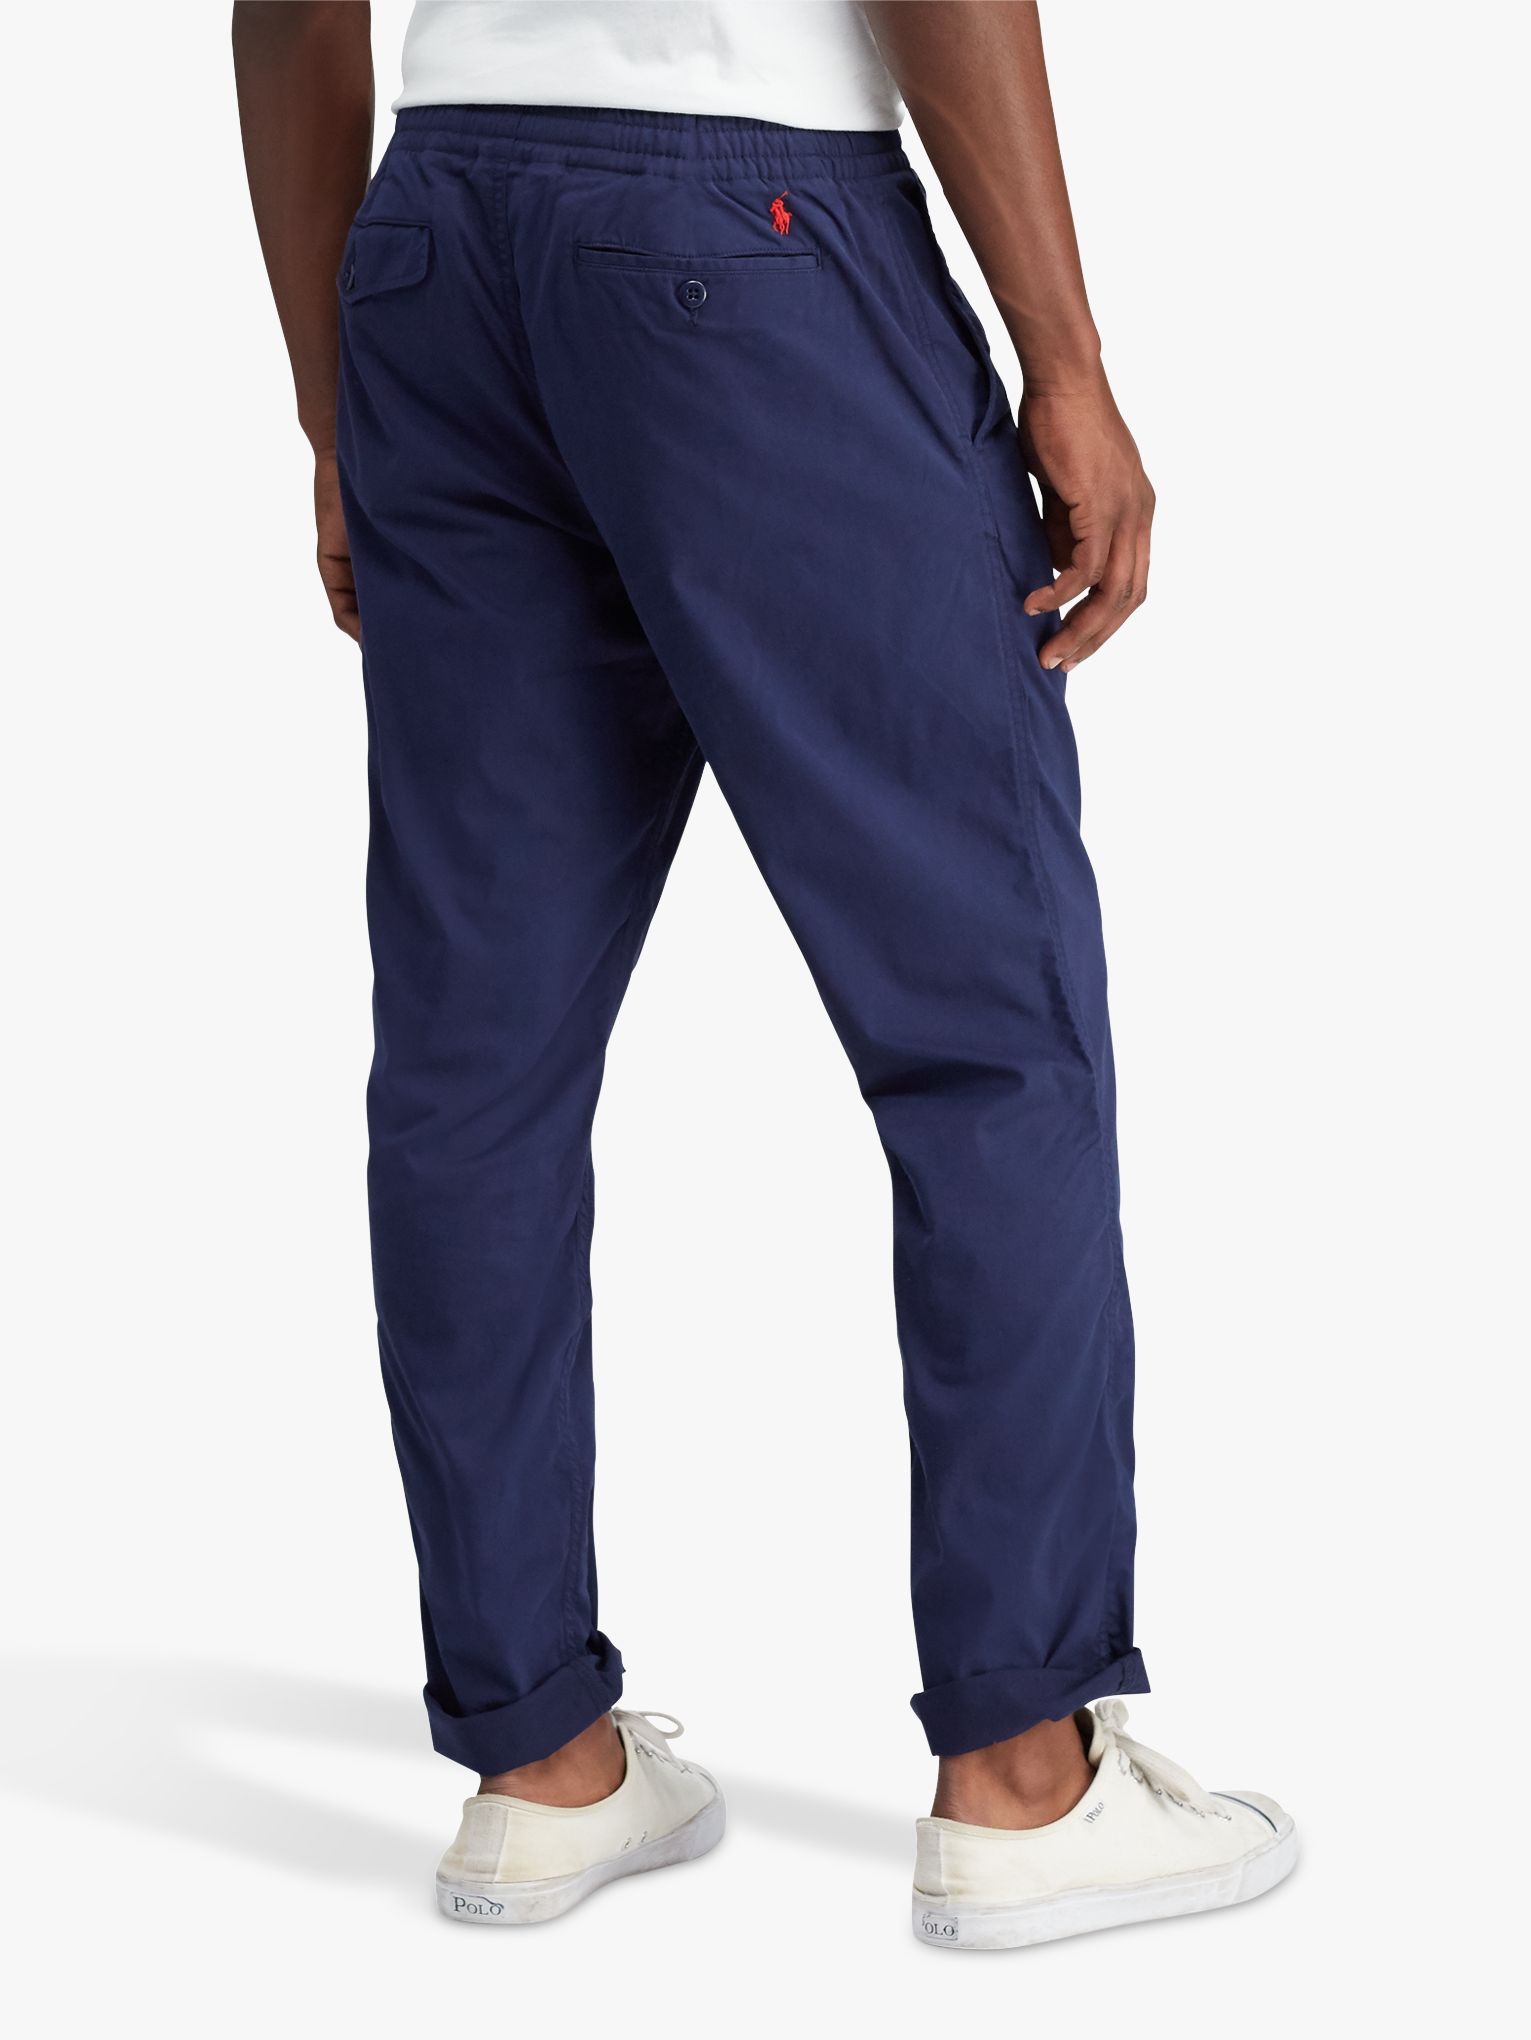 Polo Ralph Lauren Prepster Trousers, Newport Navy, 32R